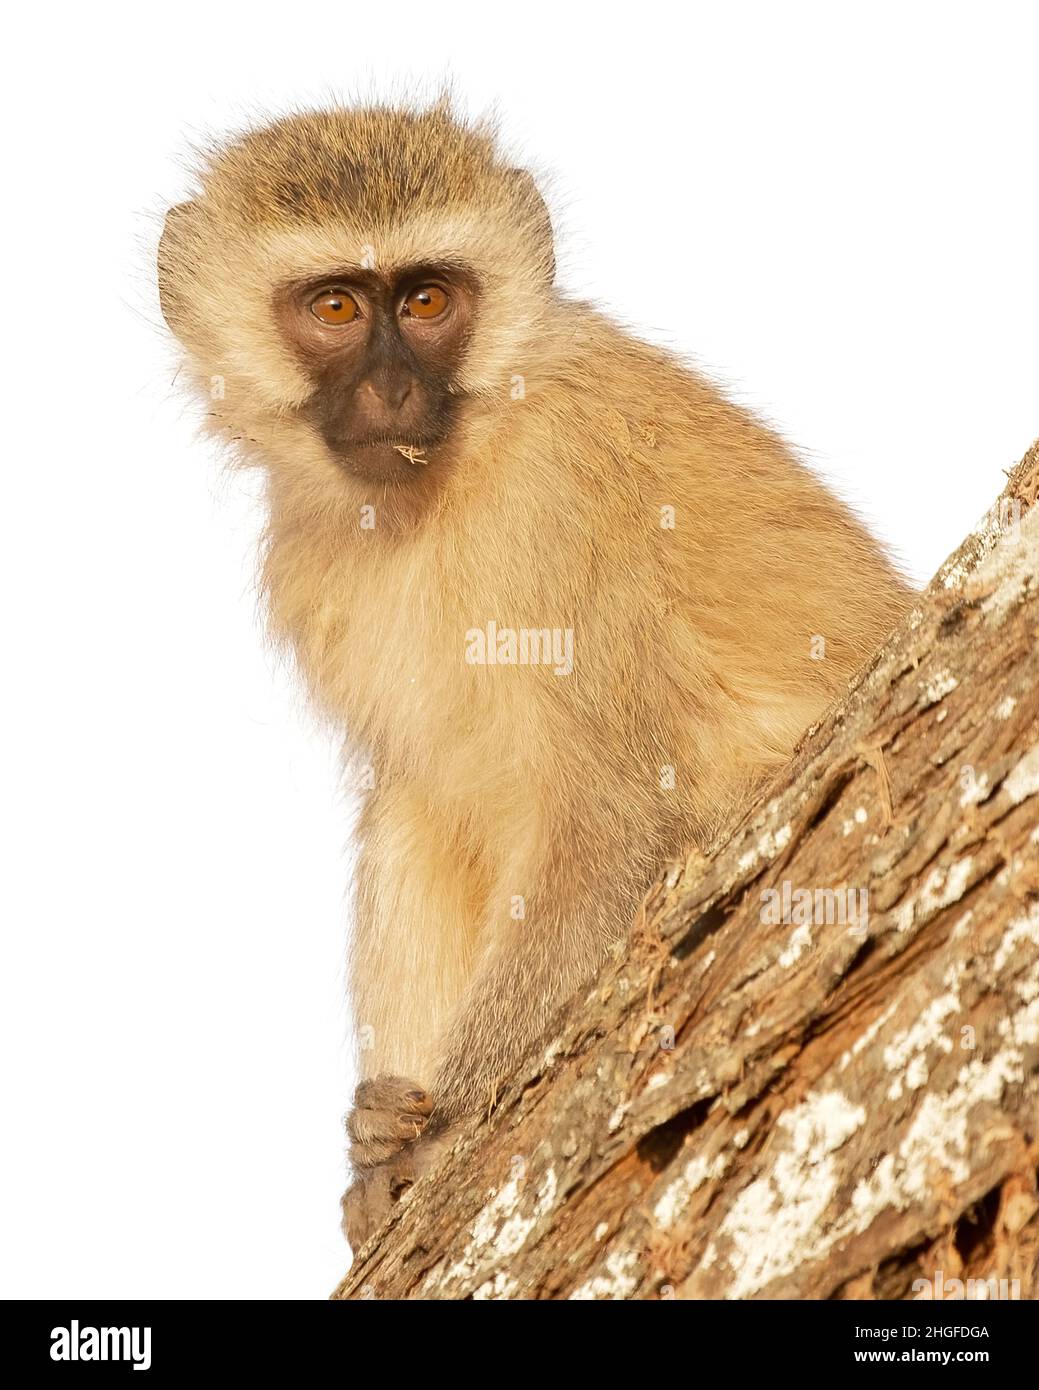 Alto-chiave Vervet scimmia (Chlorocobus pygerythrus) ritratto, Tarangire National Park; Tanzania; Africa Foto Stock